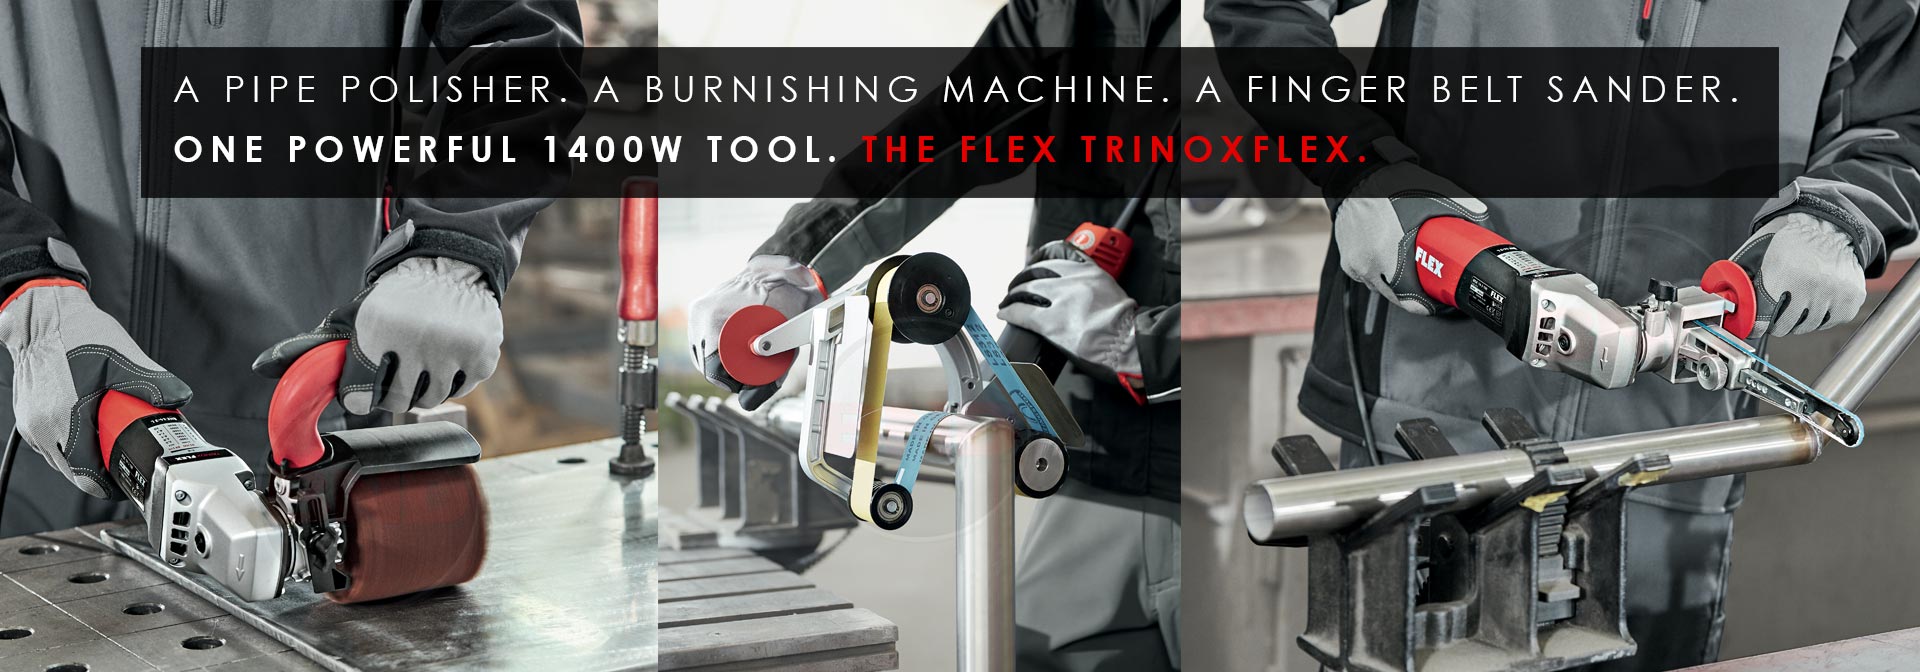 Flex Trinoxflex - 3 in 1 industrial power tool for Metalworking